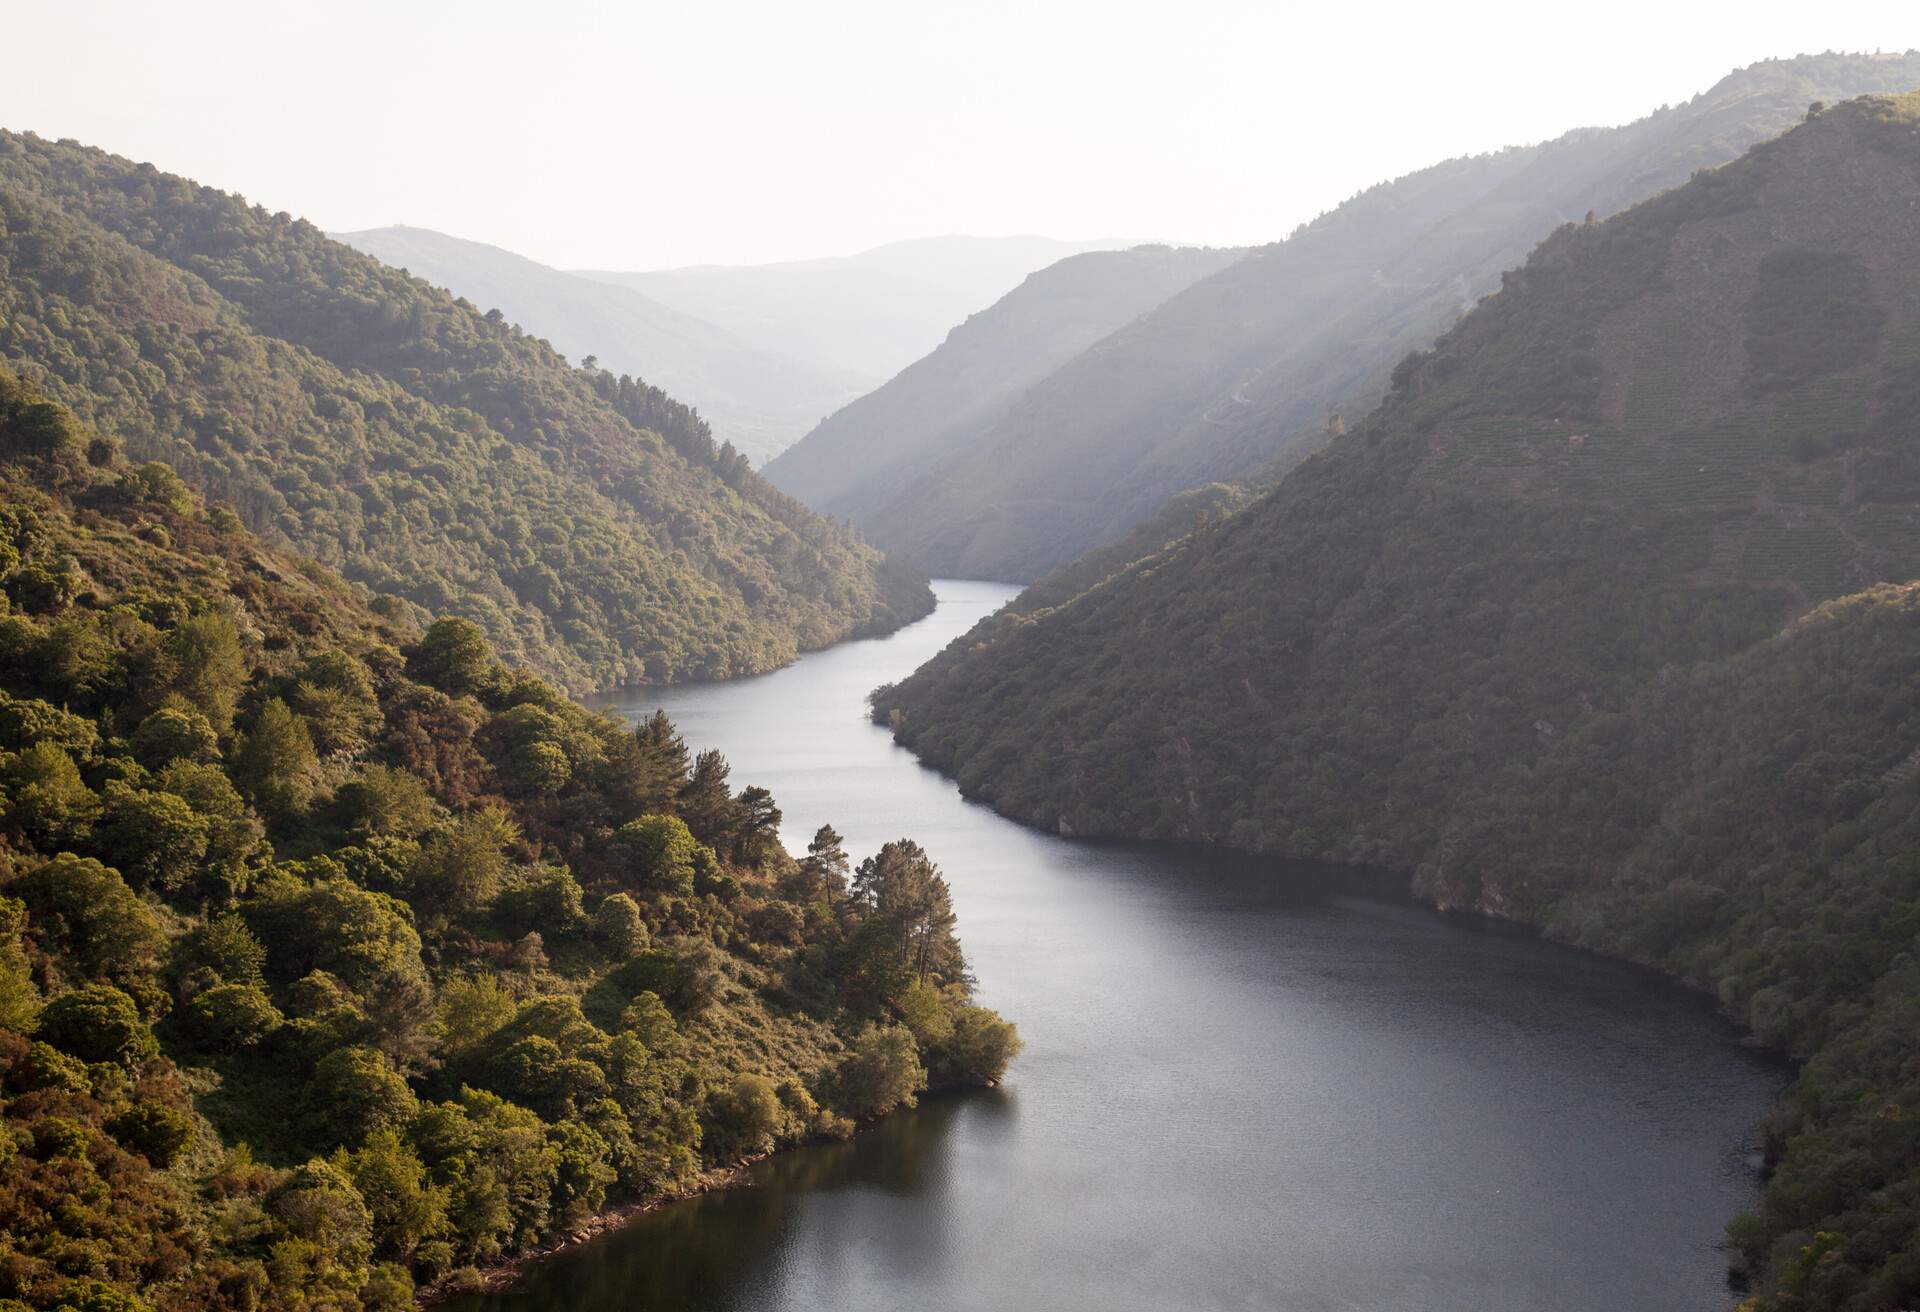 Sil river canyon, Ribeira Sacra, Lugo province, Galicia.